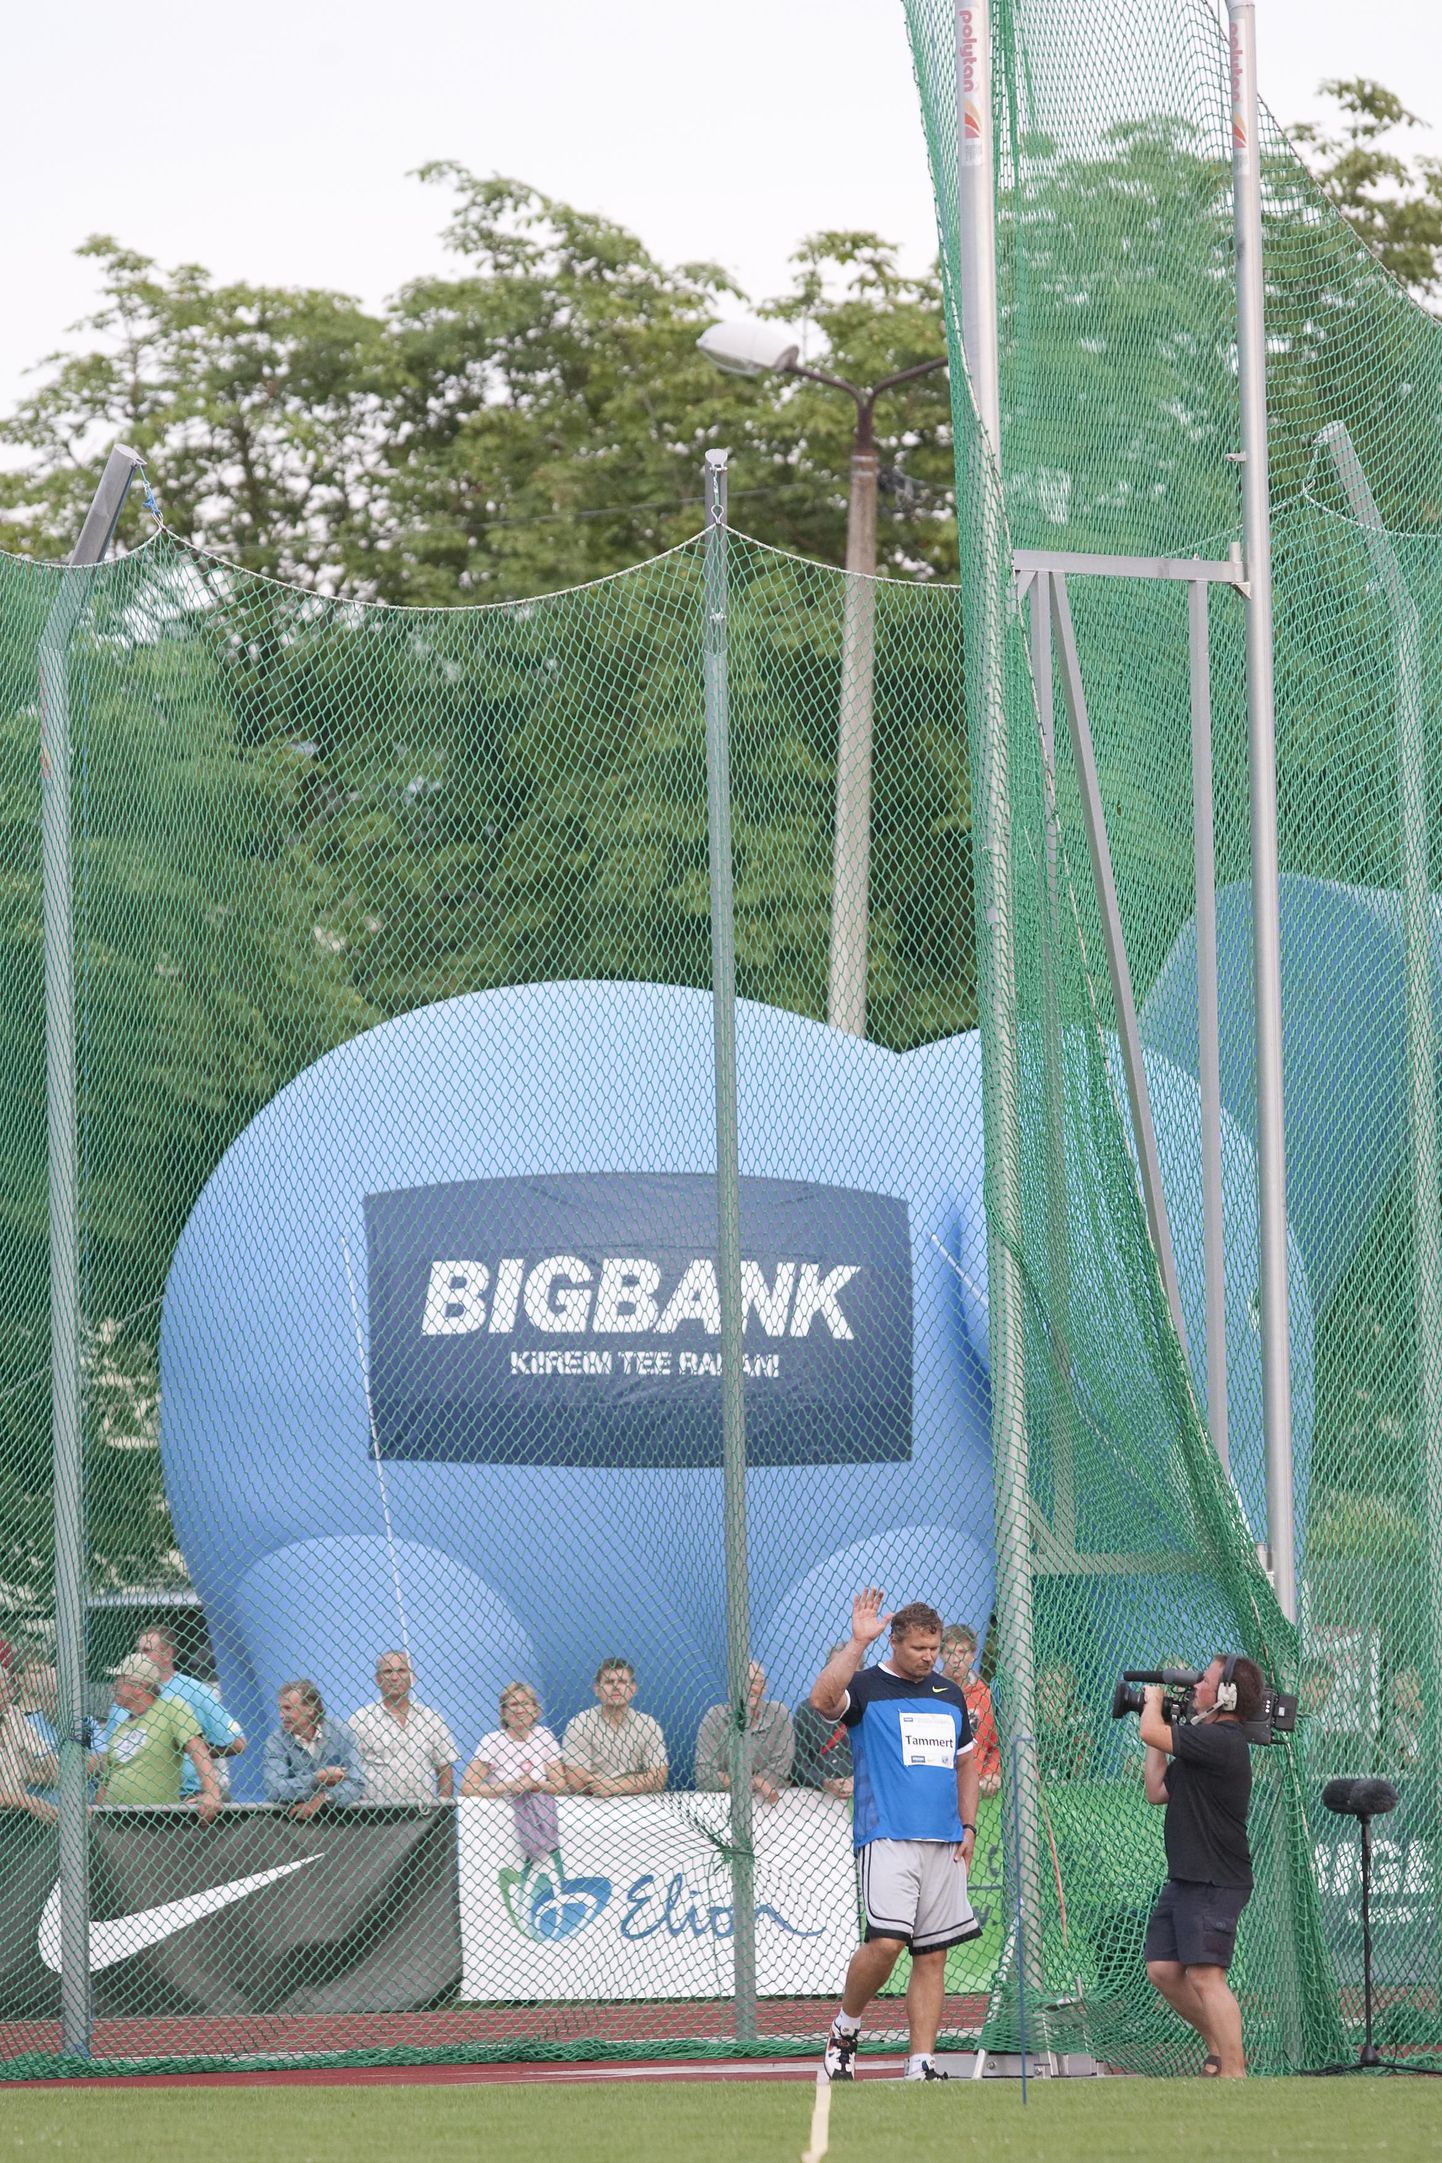 Bigbanki logo